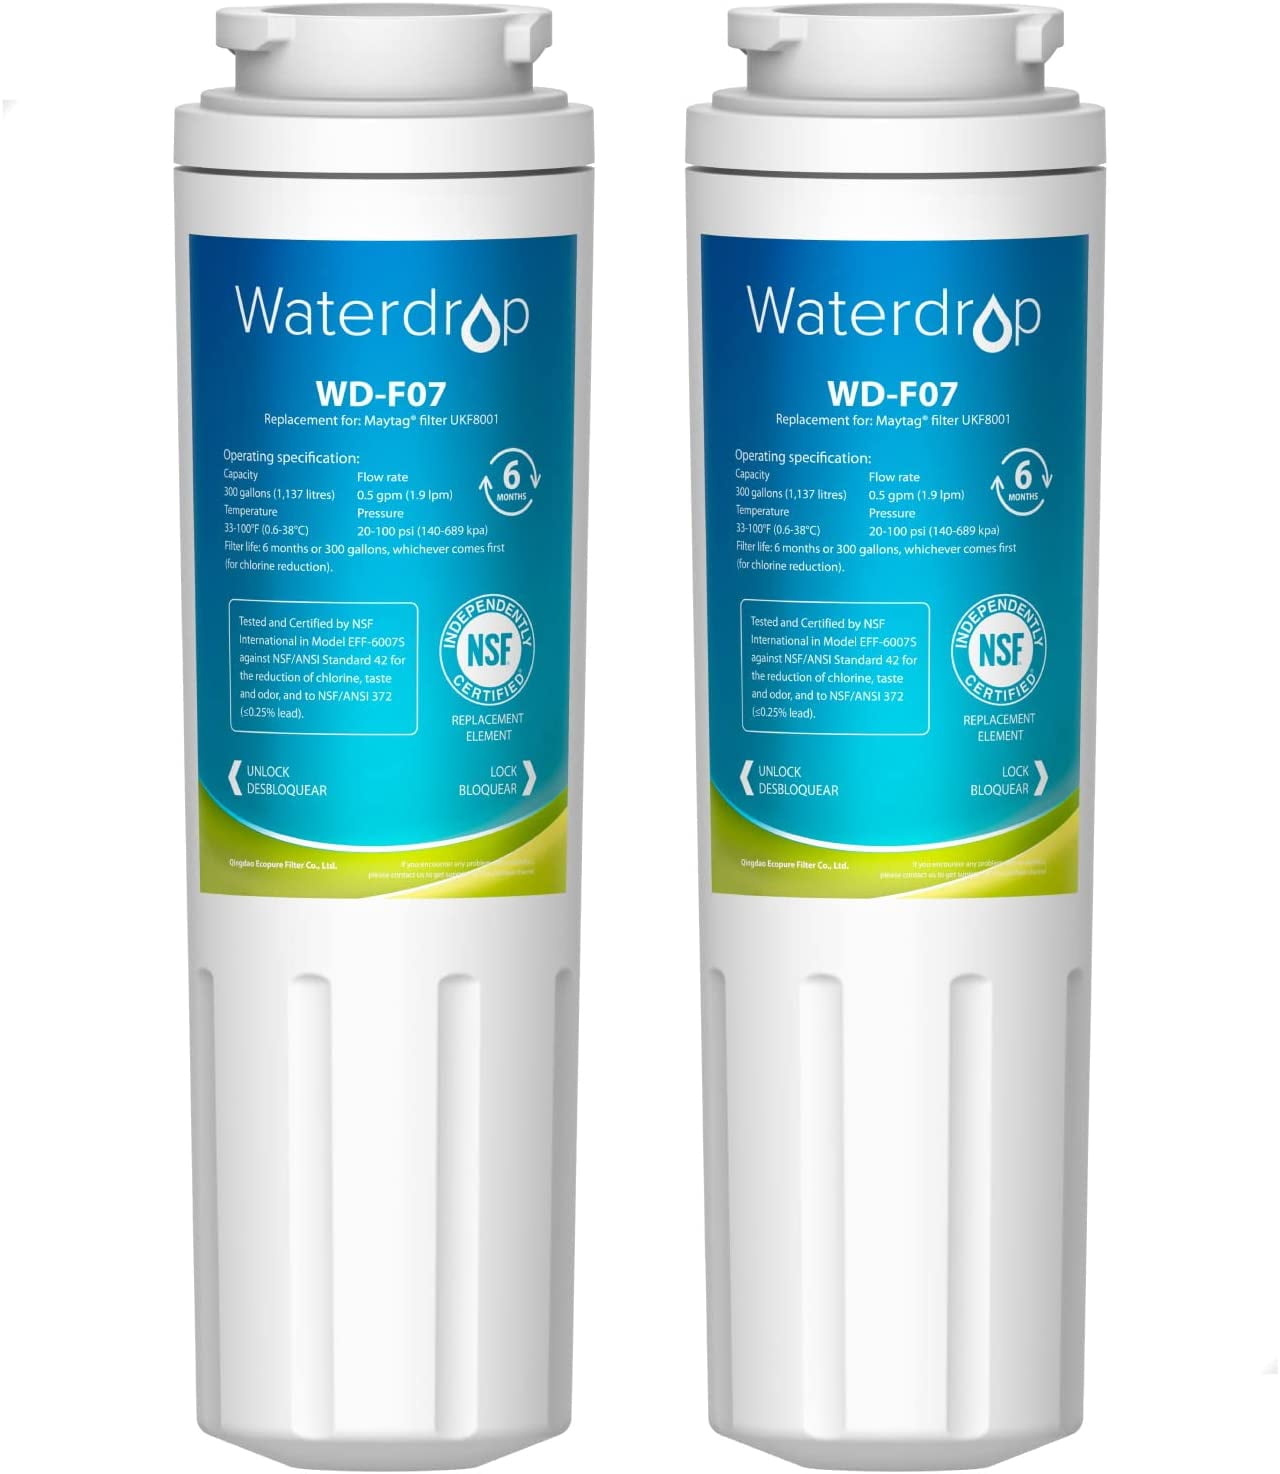 Waterdrop NSF 42 Certified DA29-00020B Refrigerator Water Filter